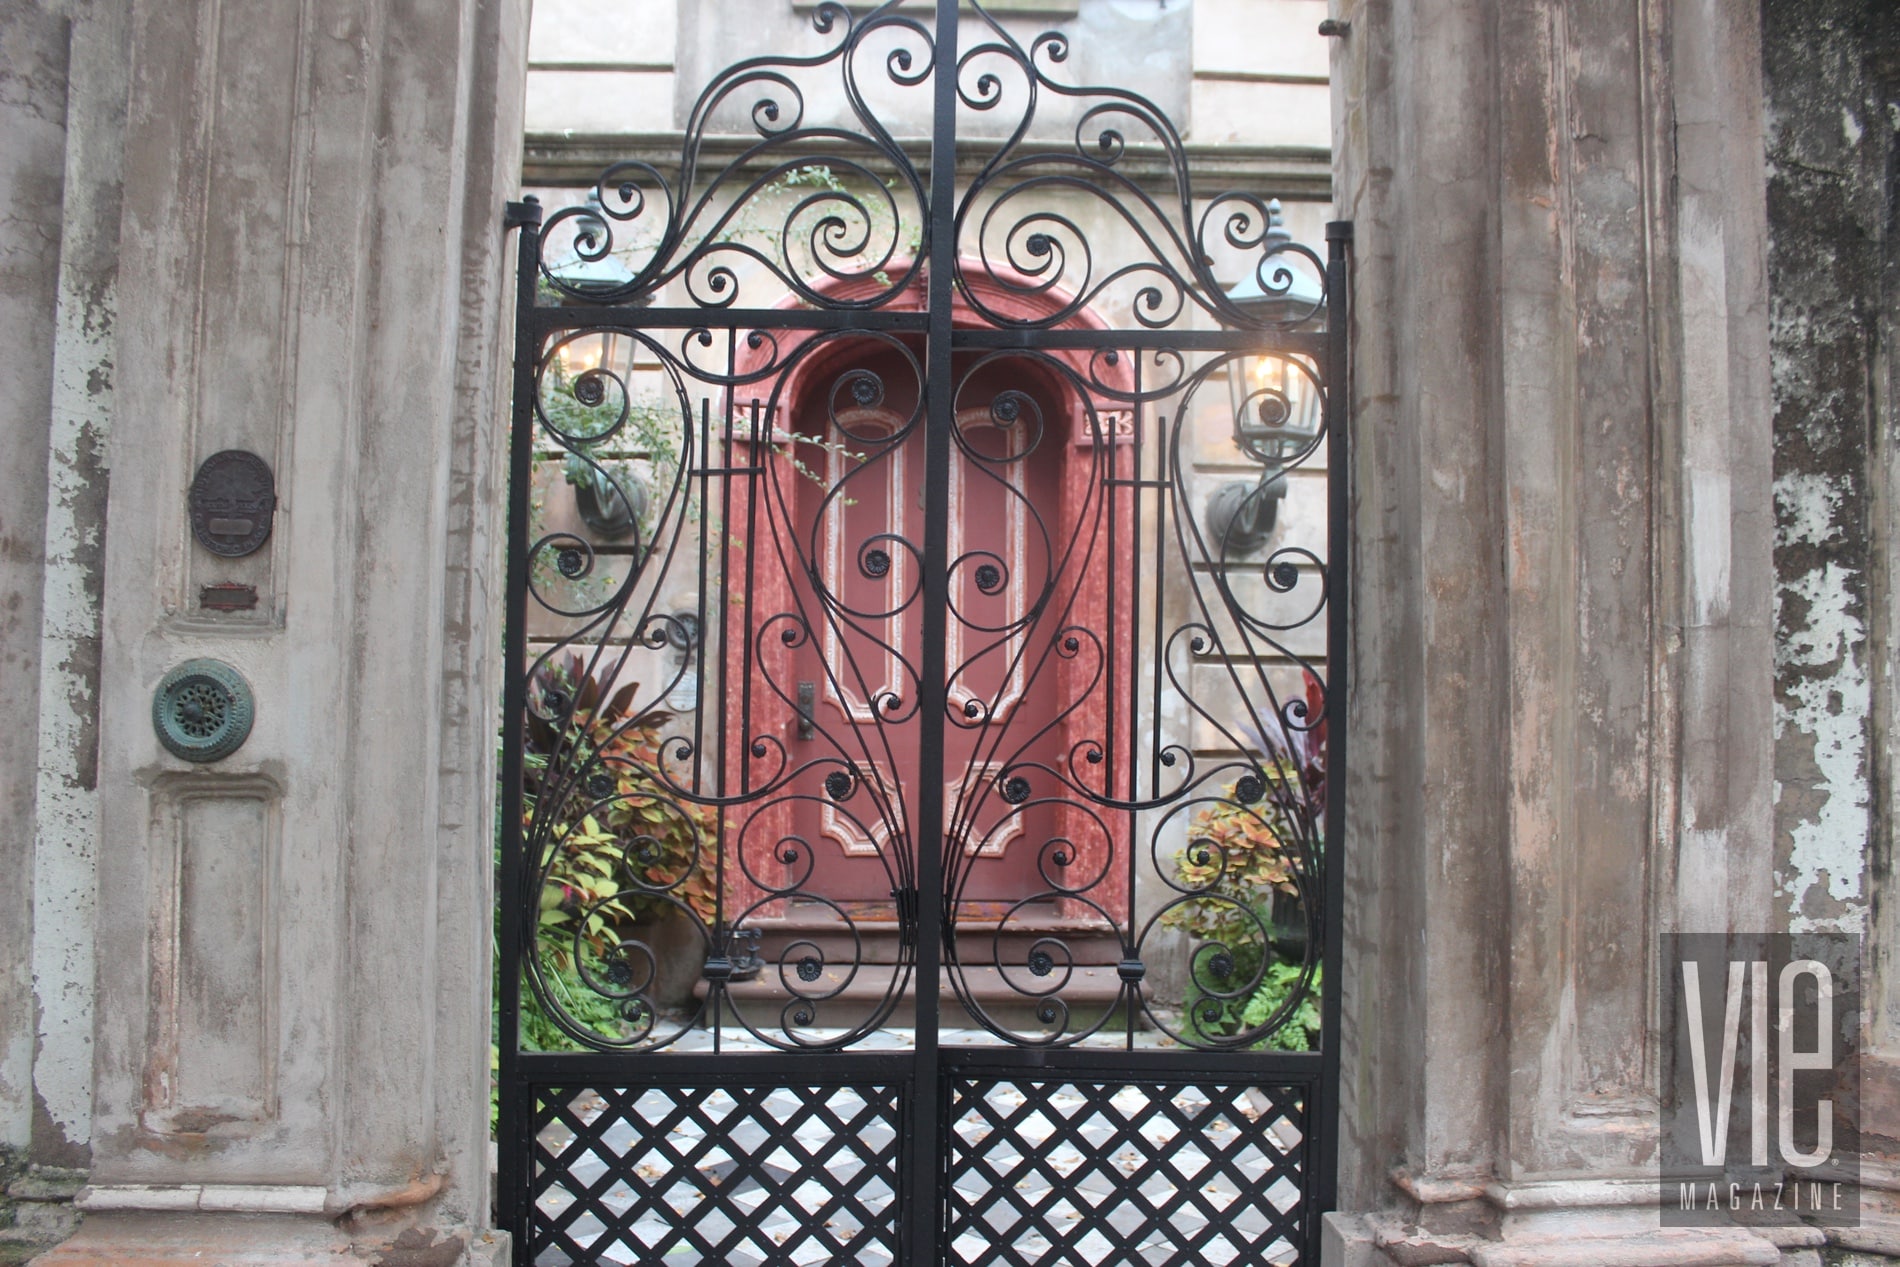 Historic Home Charleston SC VIE Magazine Iron Gate with Courtyard